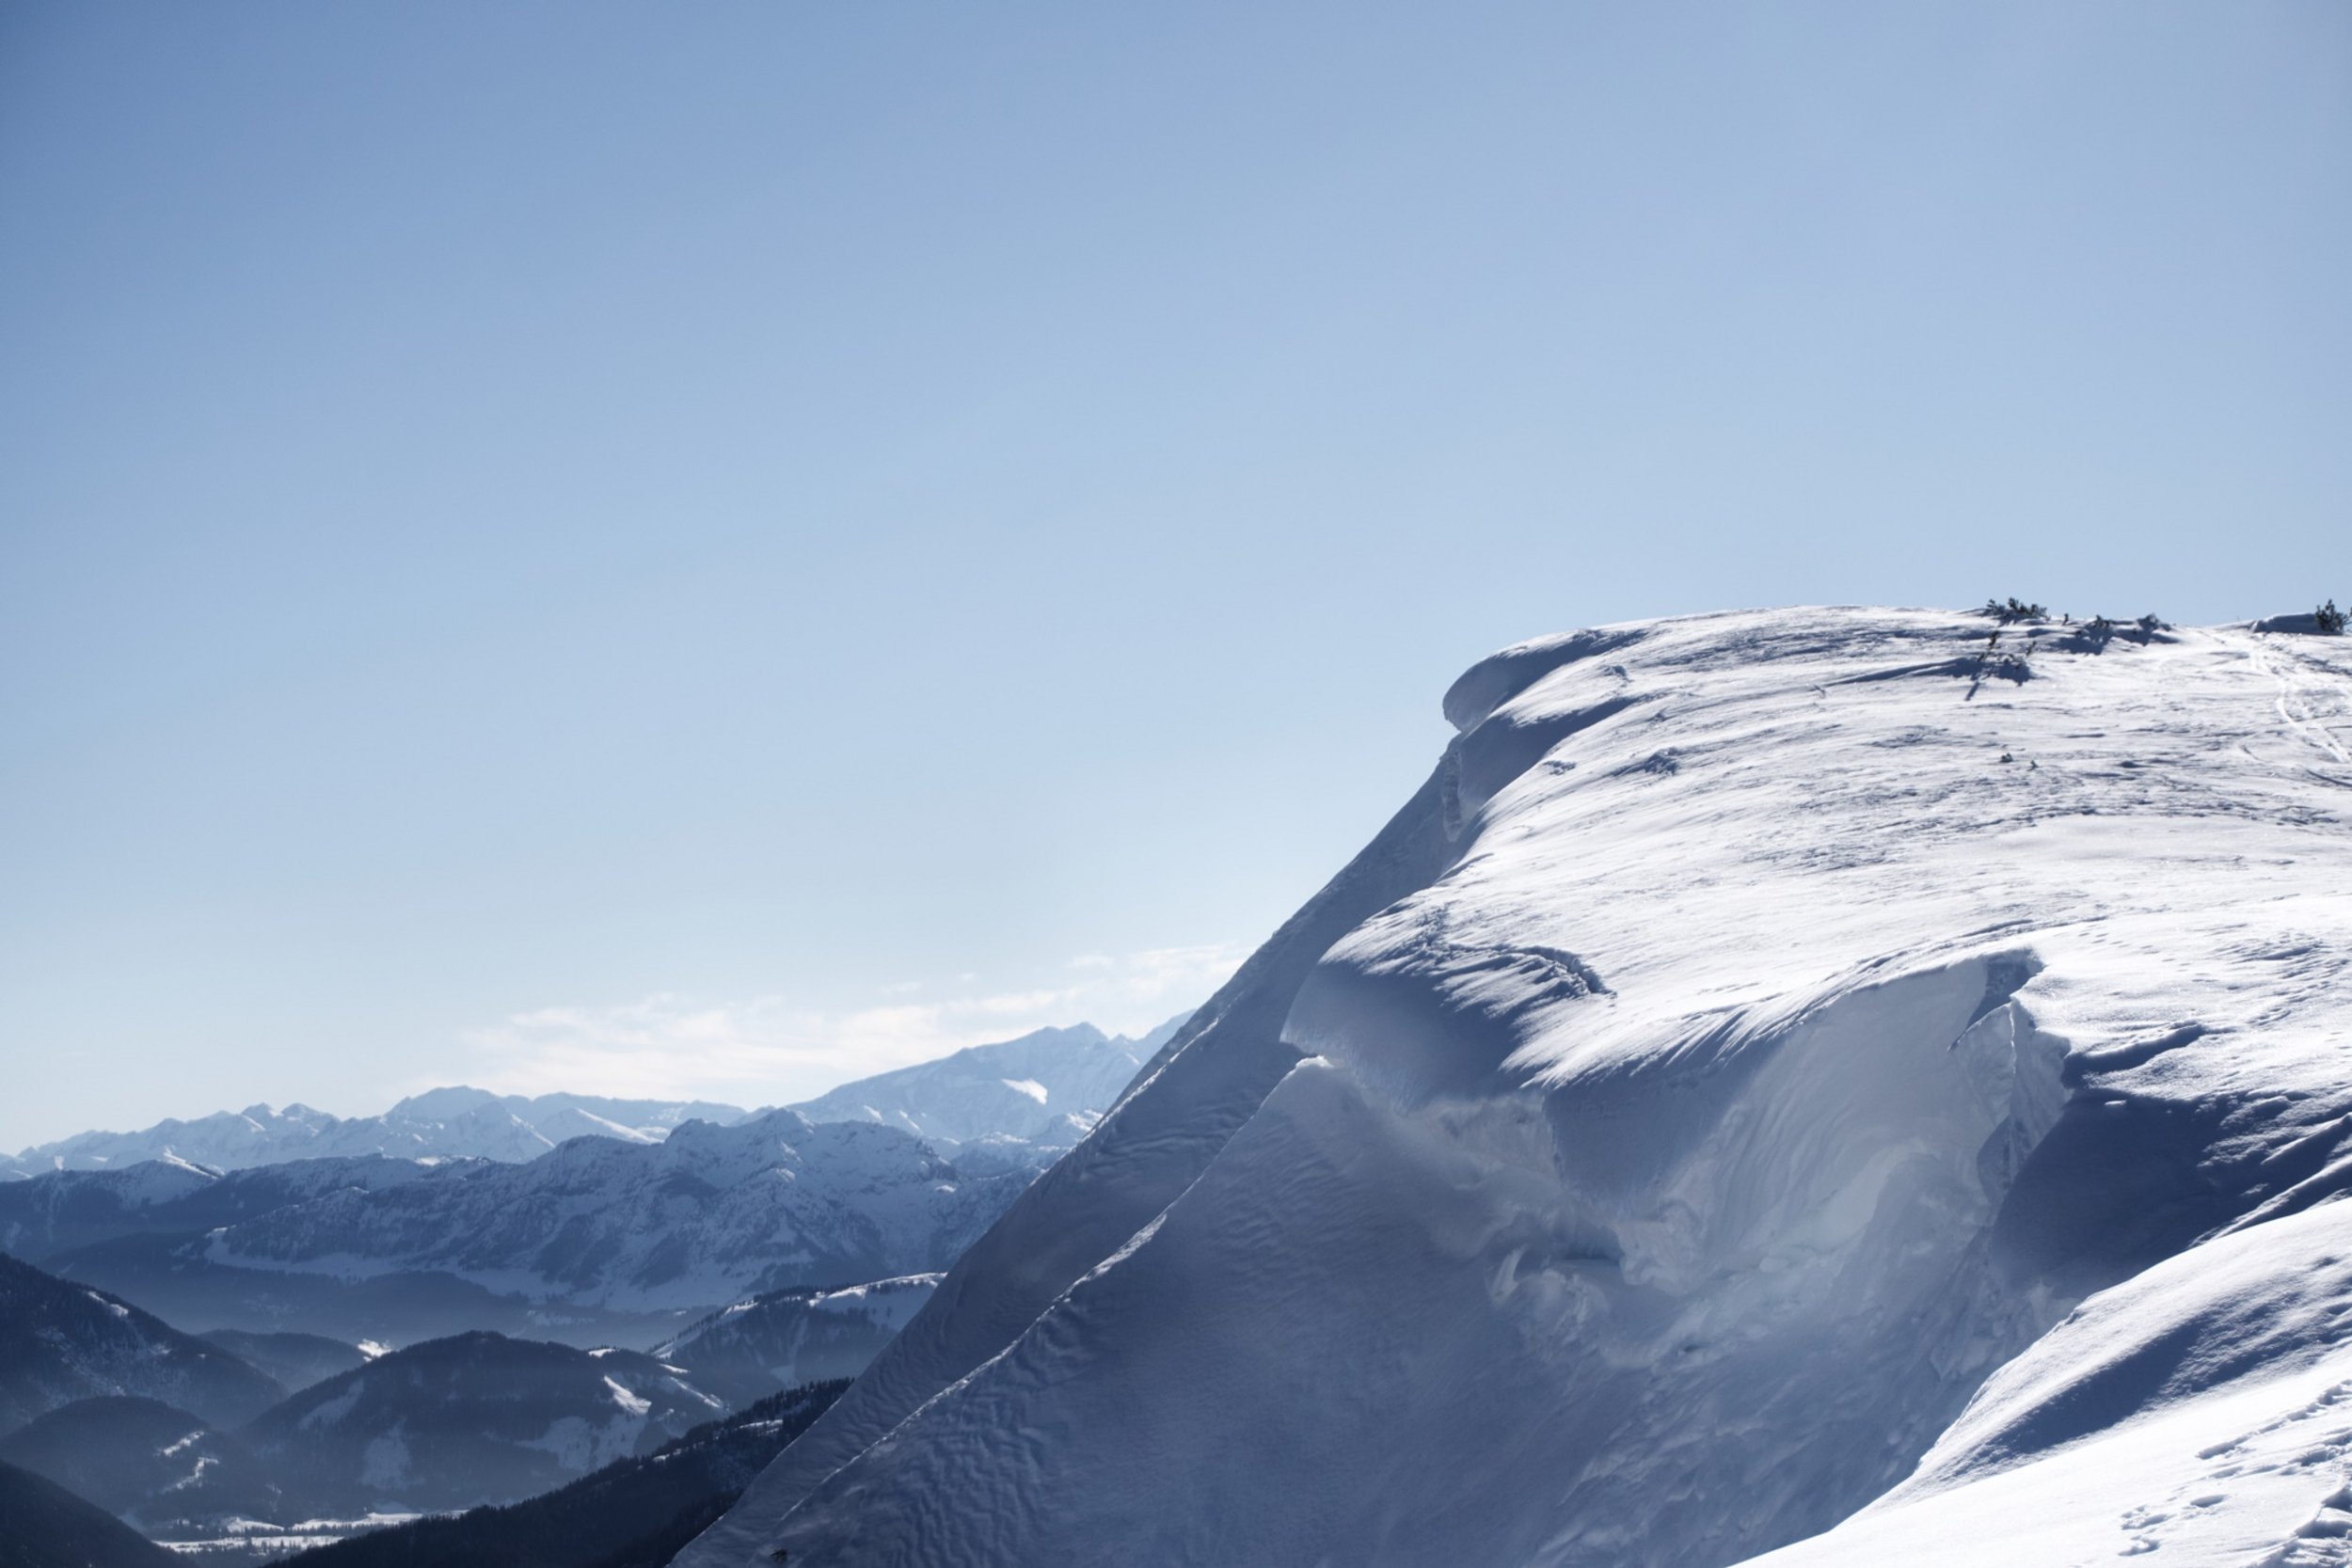 Fellhorn summit in winter